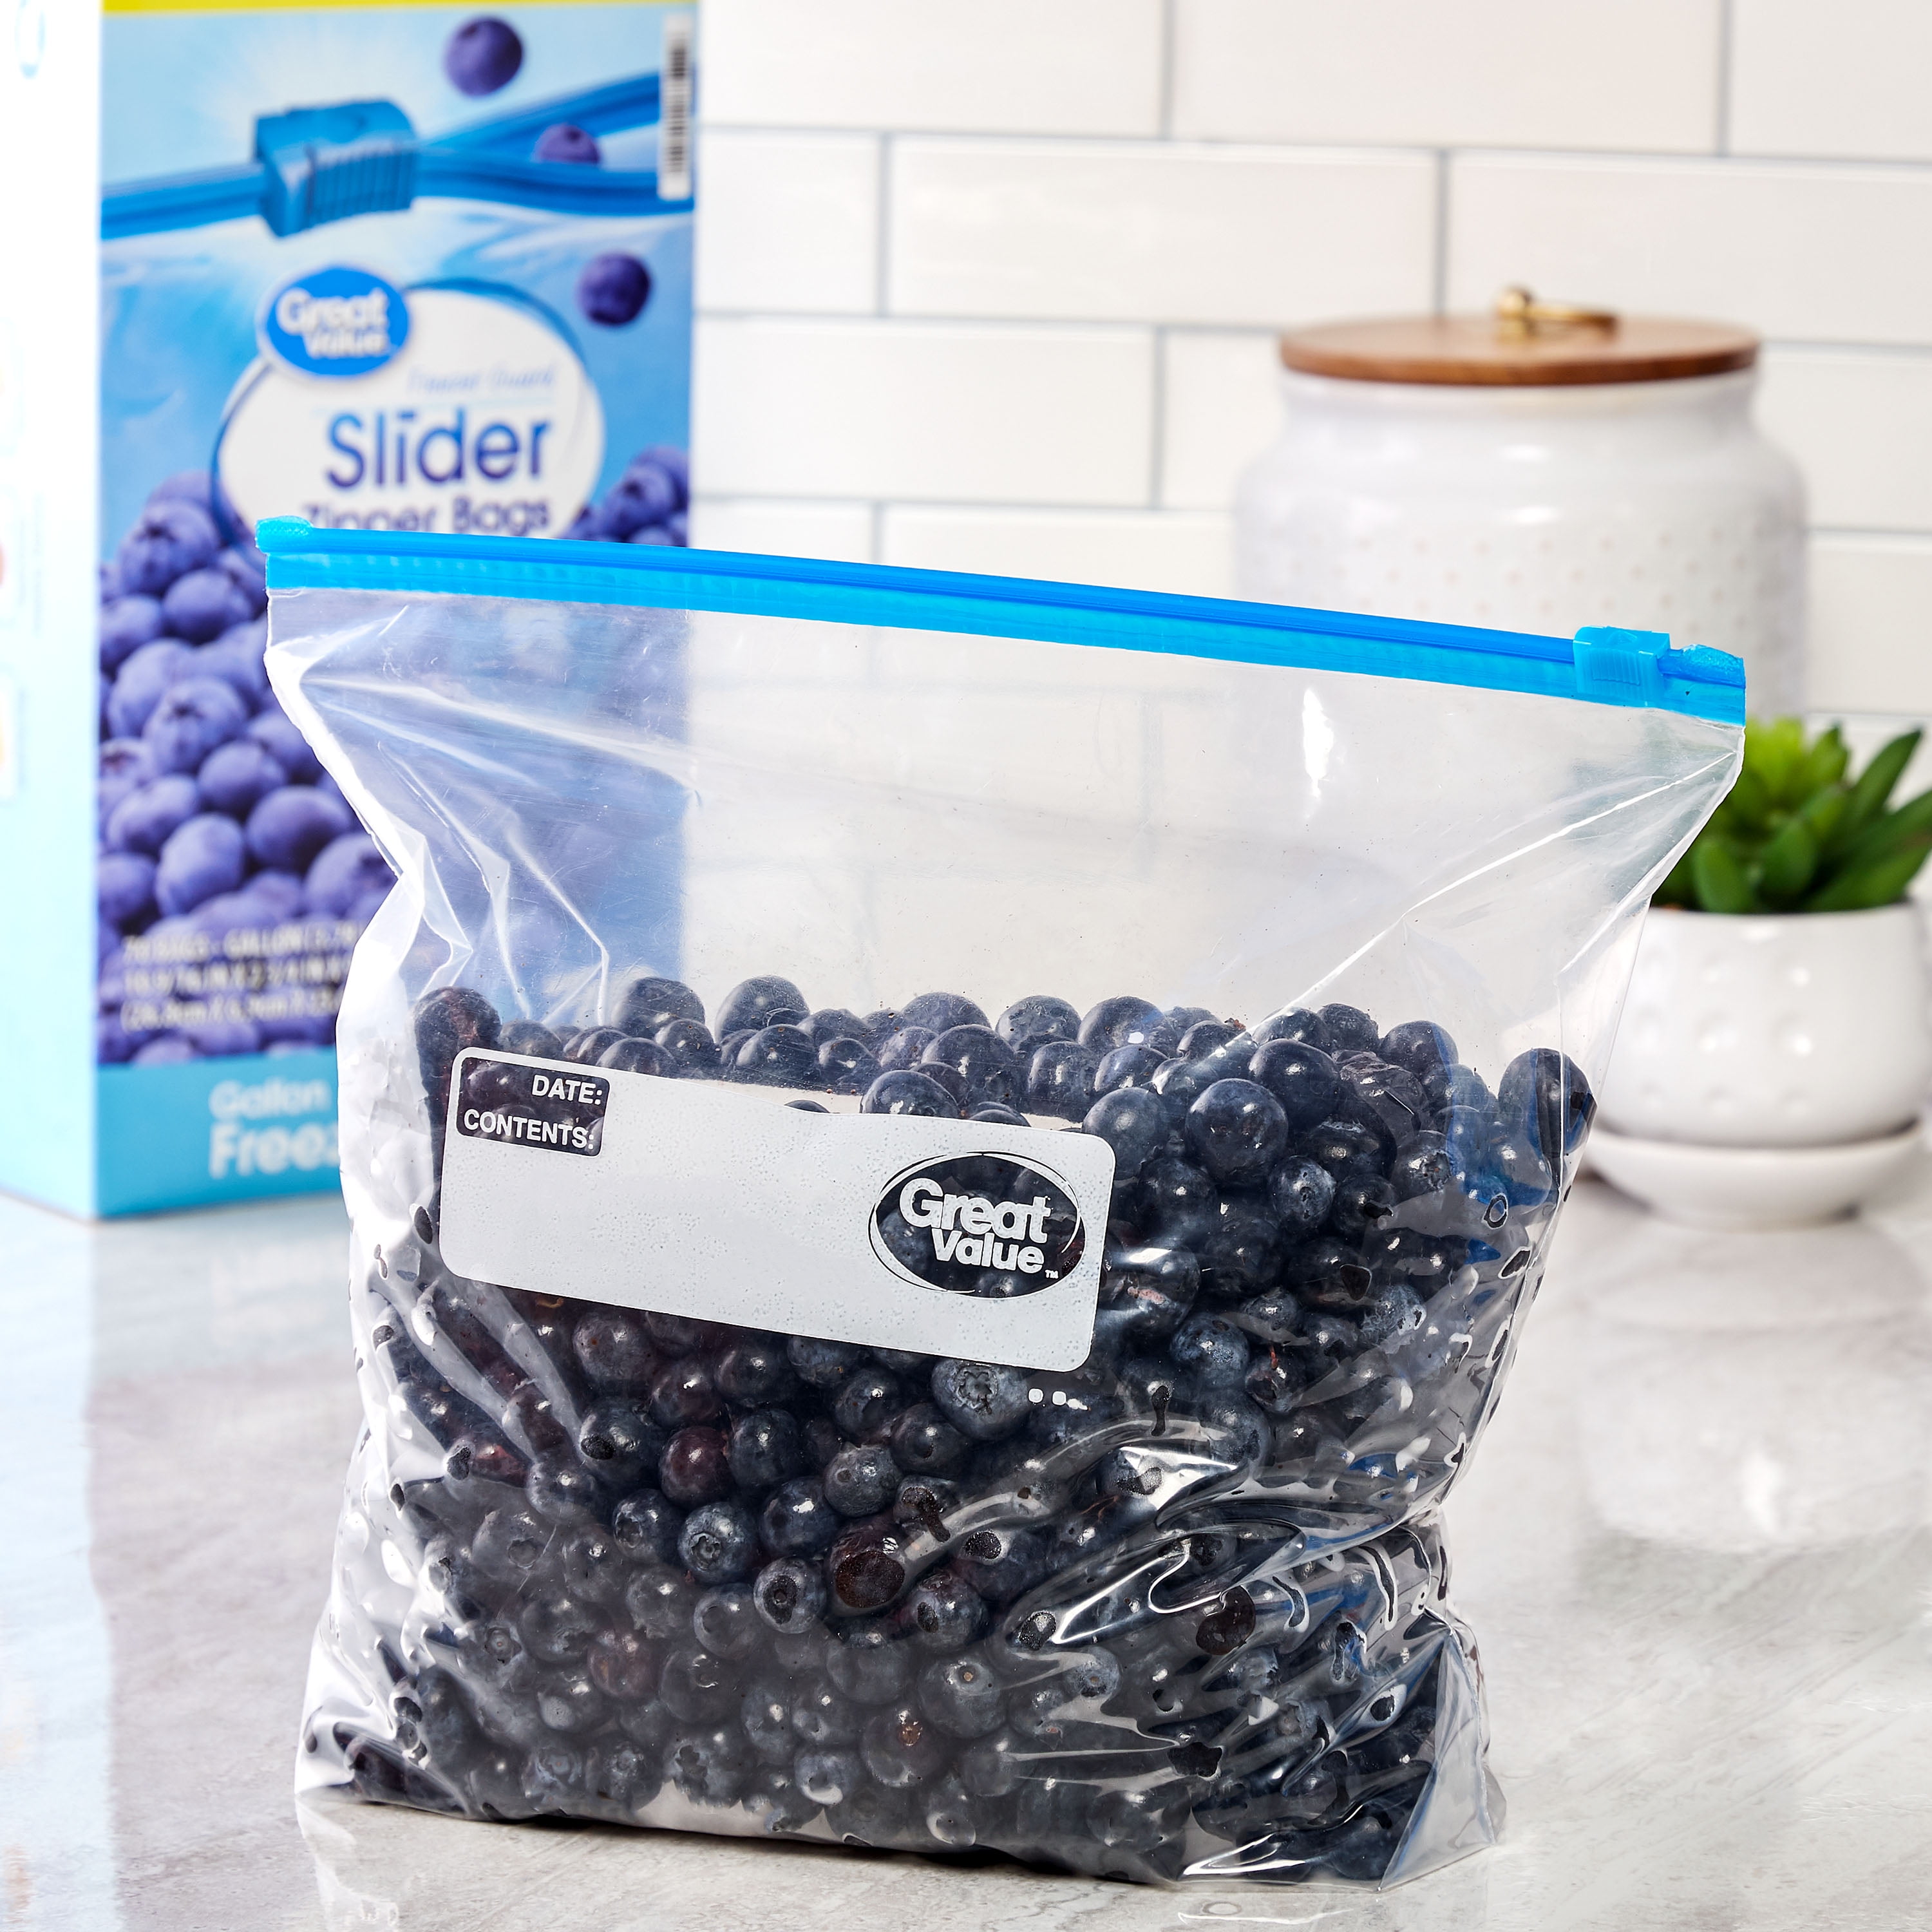 Kroger® Quart Slider Freezer Bag 1 QUART 5.875 INCH X 8 INCH X 2.25 INCH 1  PACK 30 COUNT, 30 ct - Foods Co.